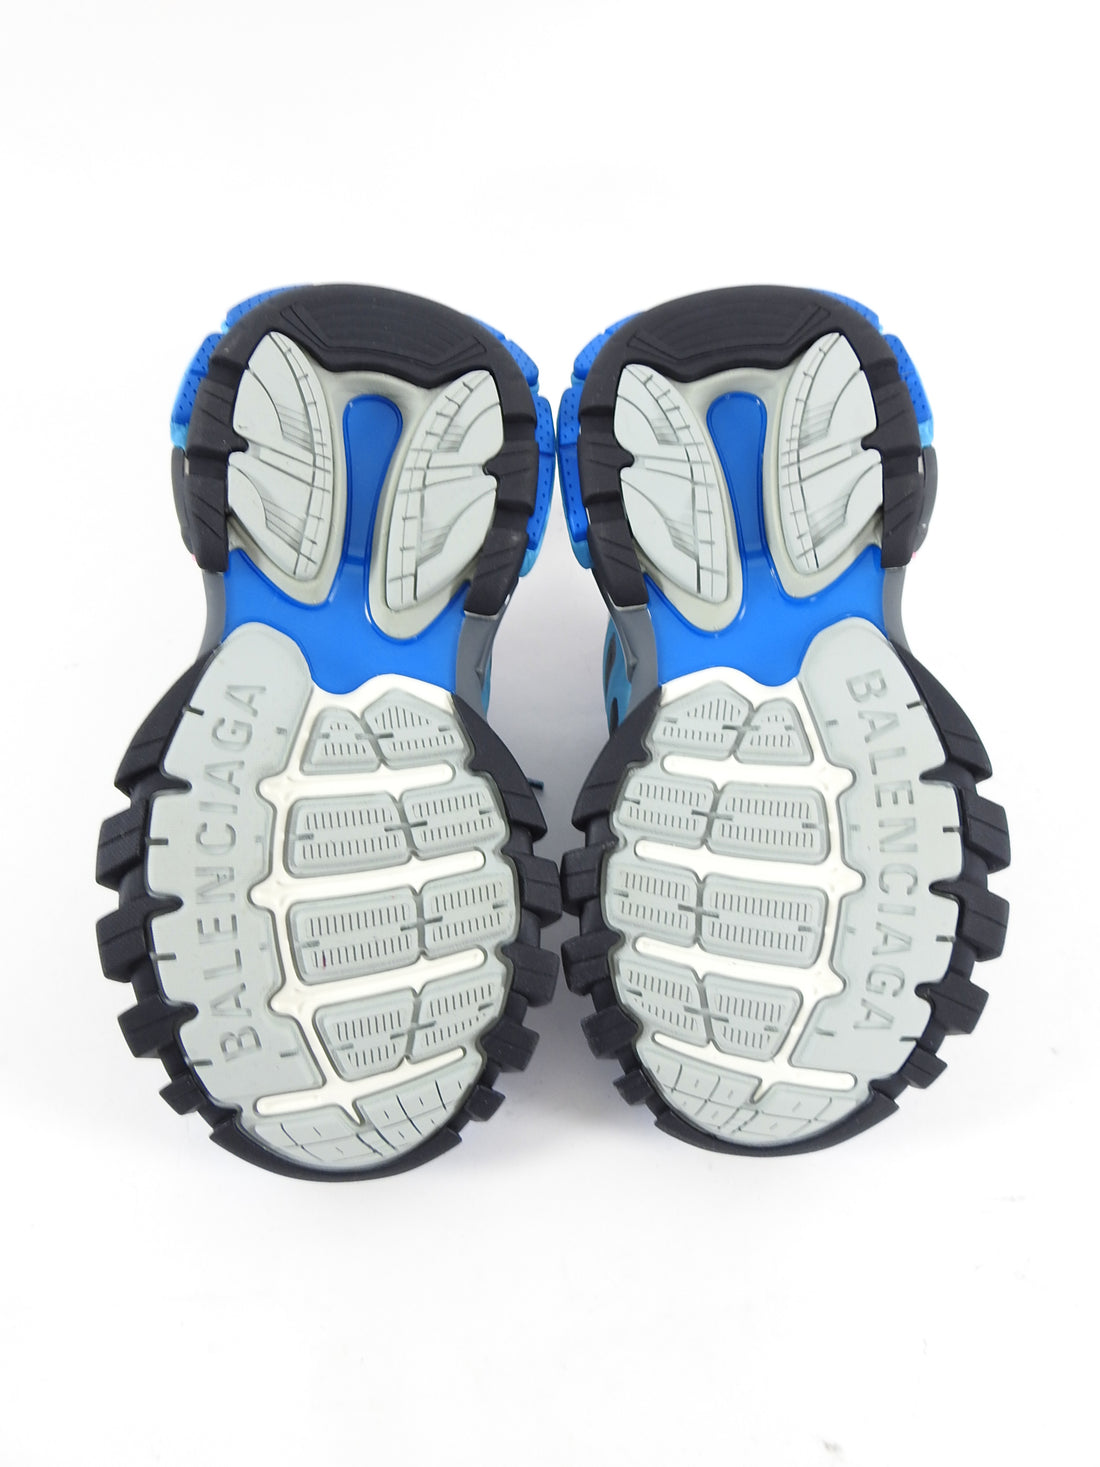 Balenciaga Blue Pink Track Runner Sneakers - Size 36 (USA 5.5)